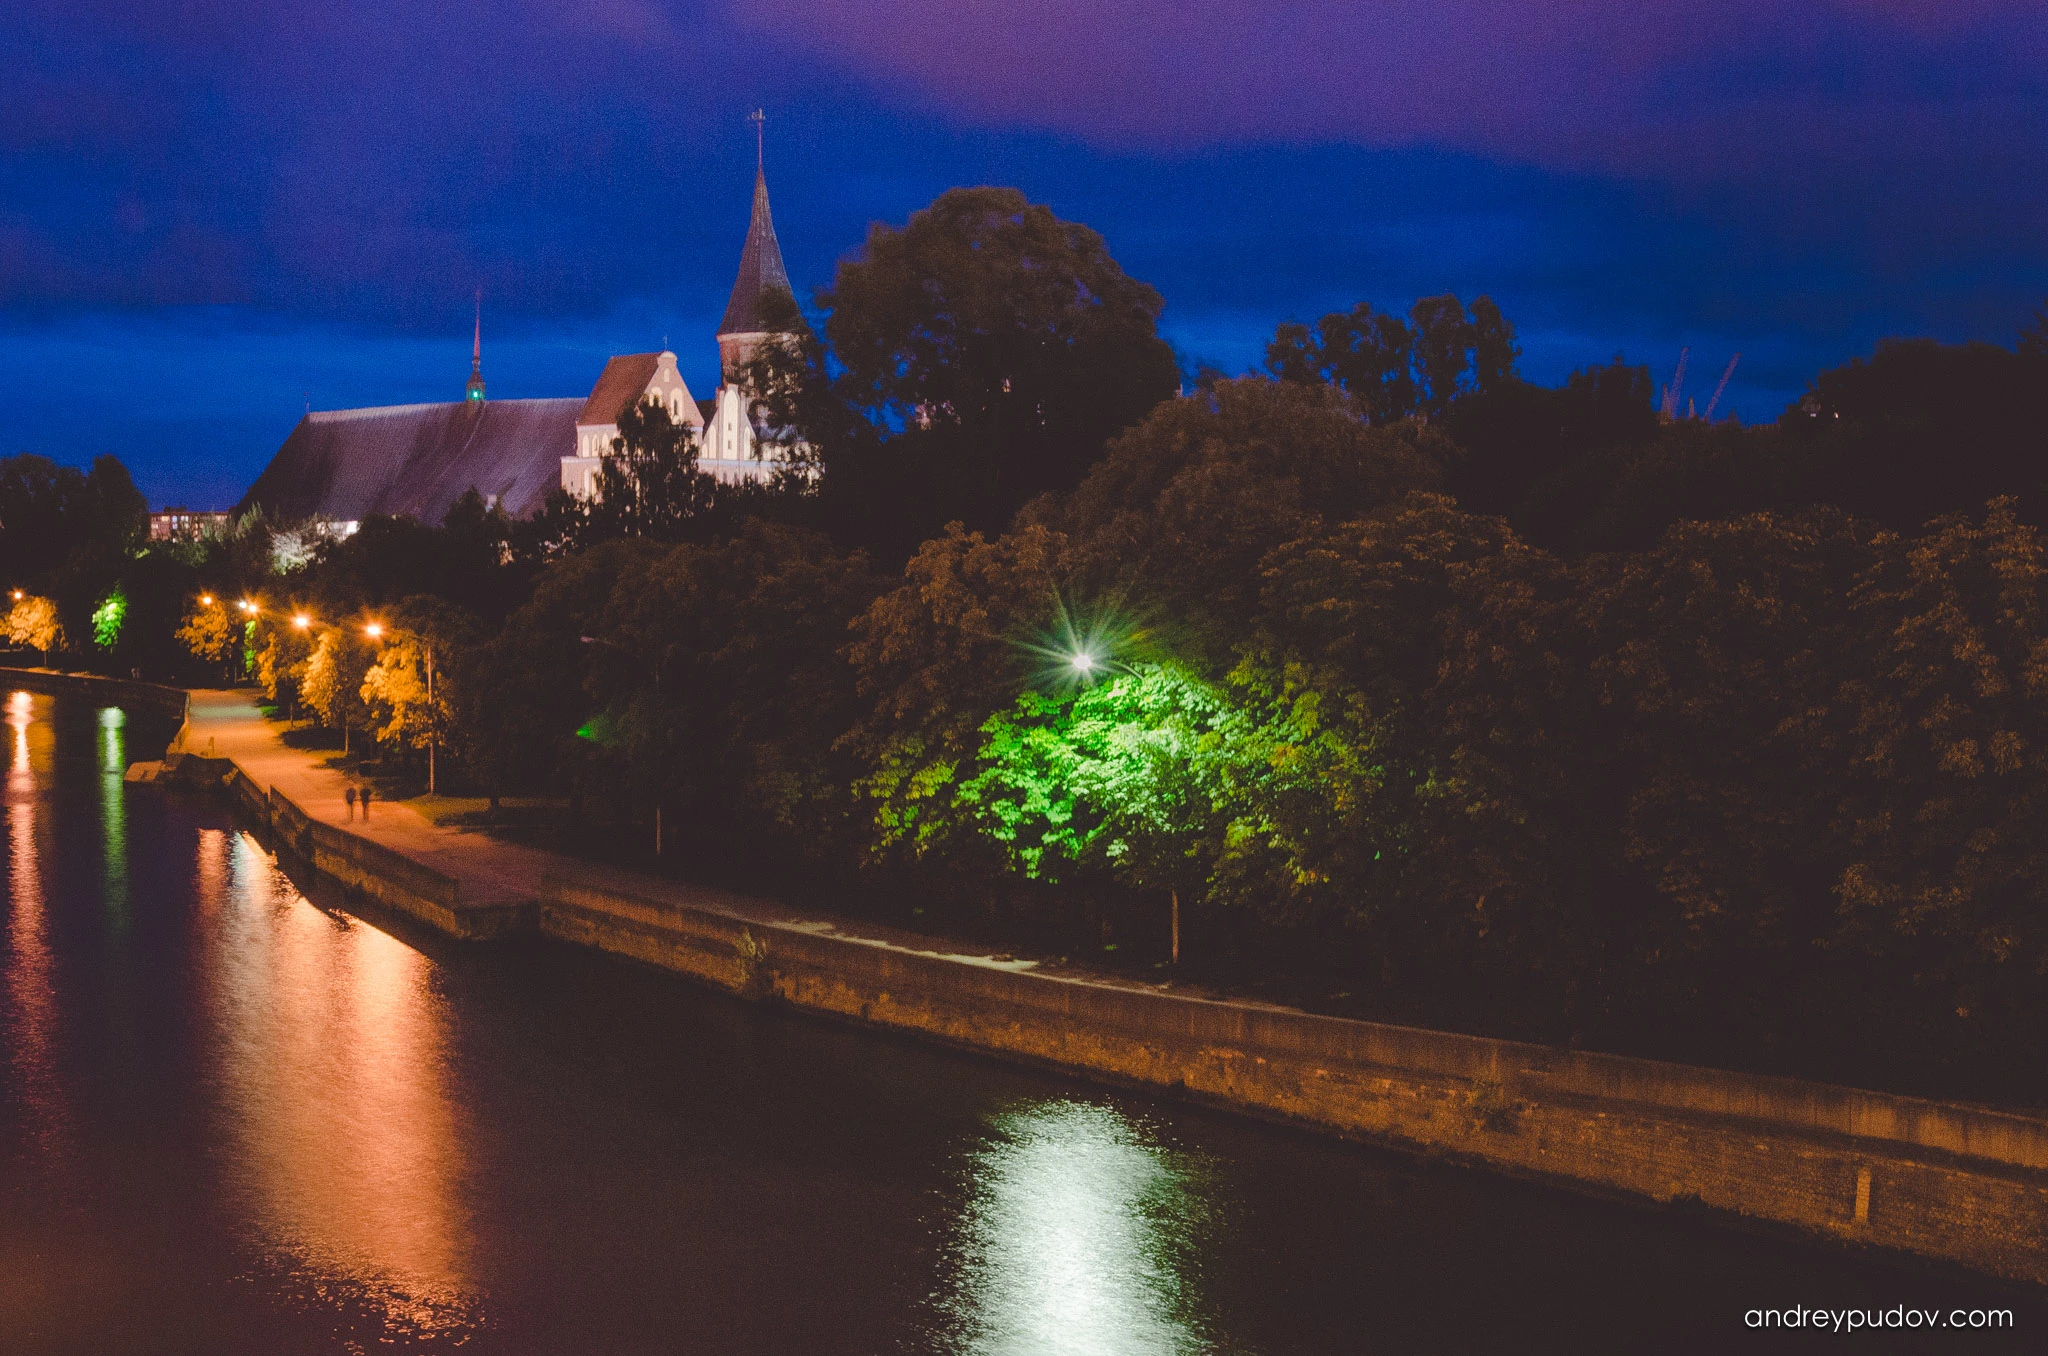 Kaliningrad. The amber capital of the World